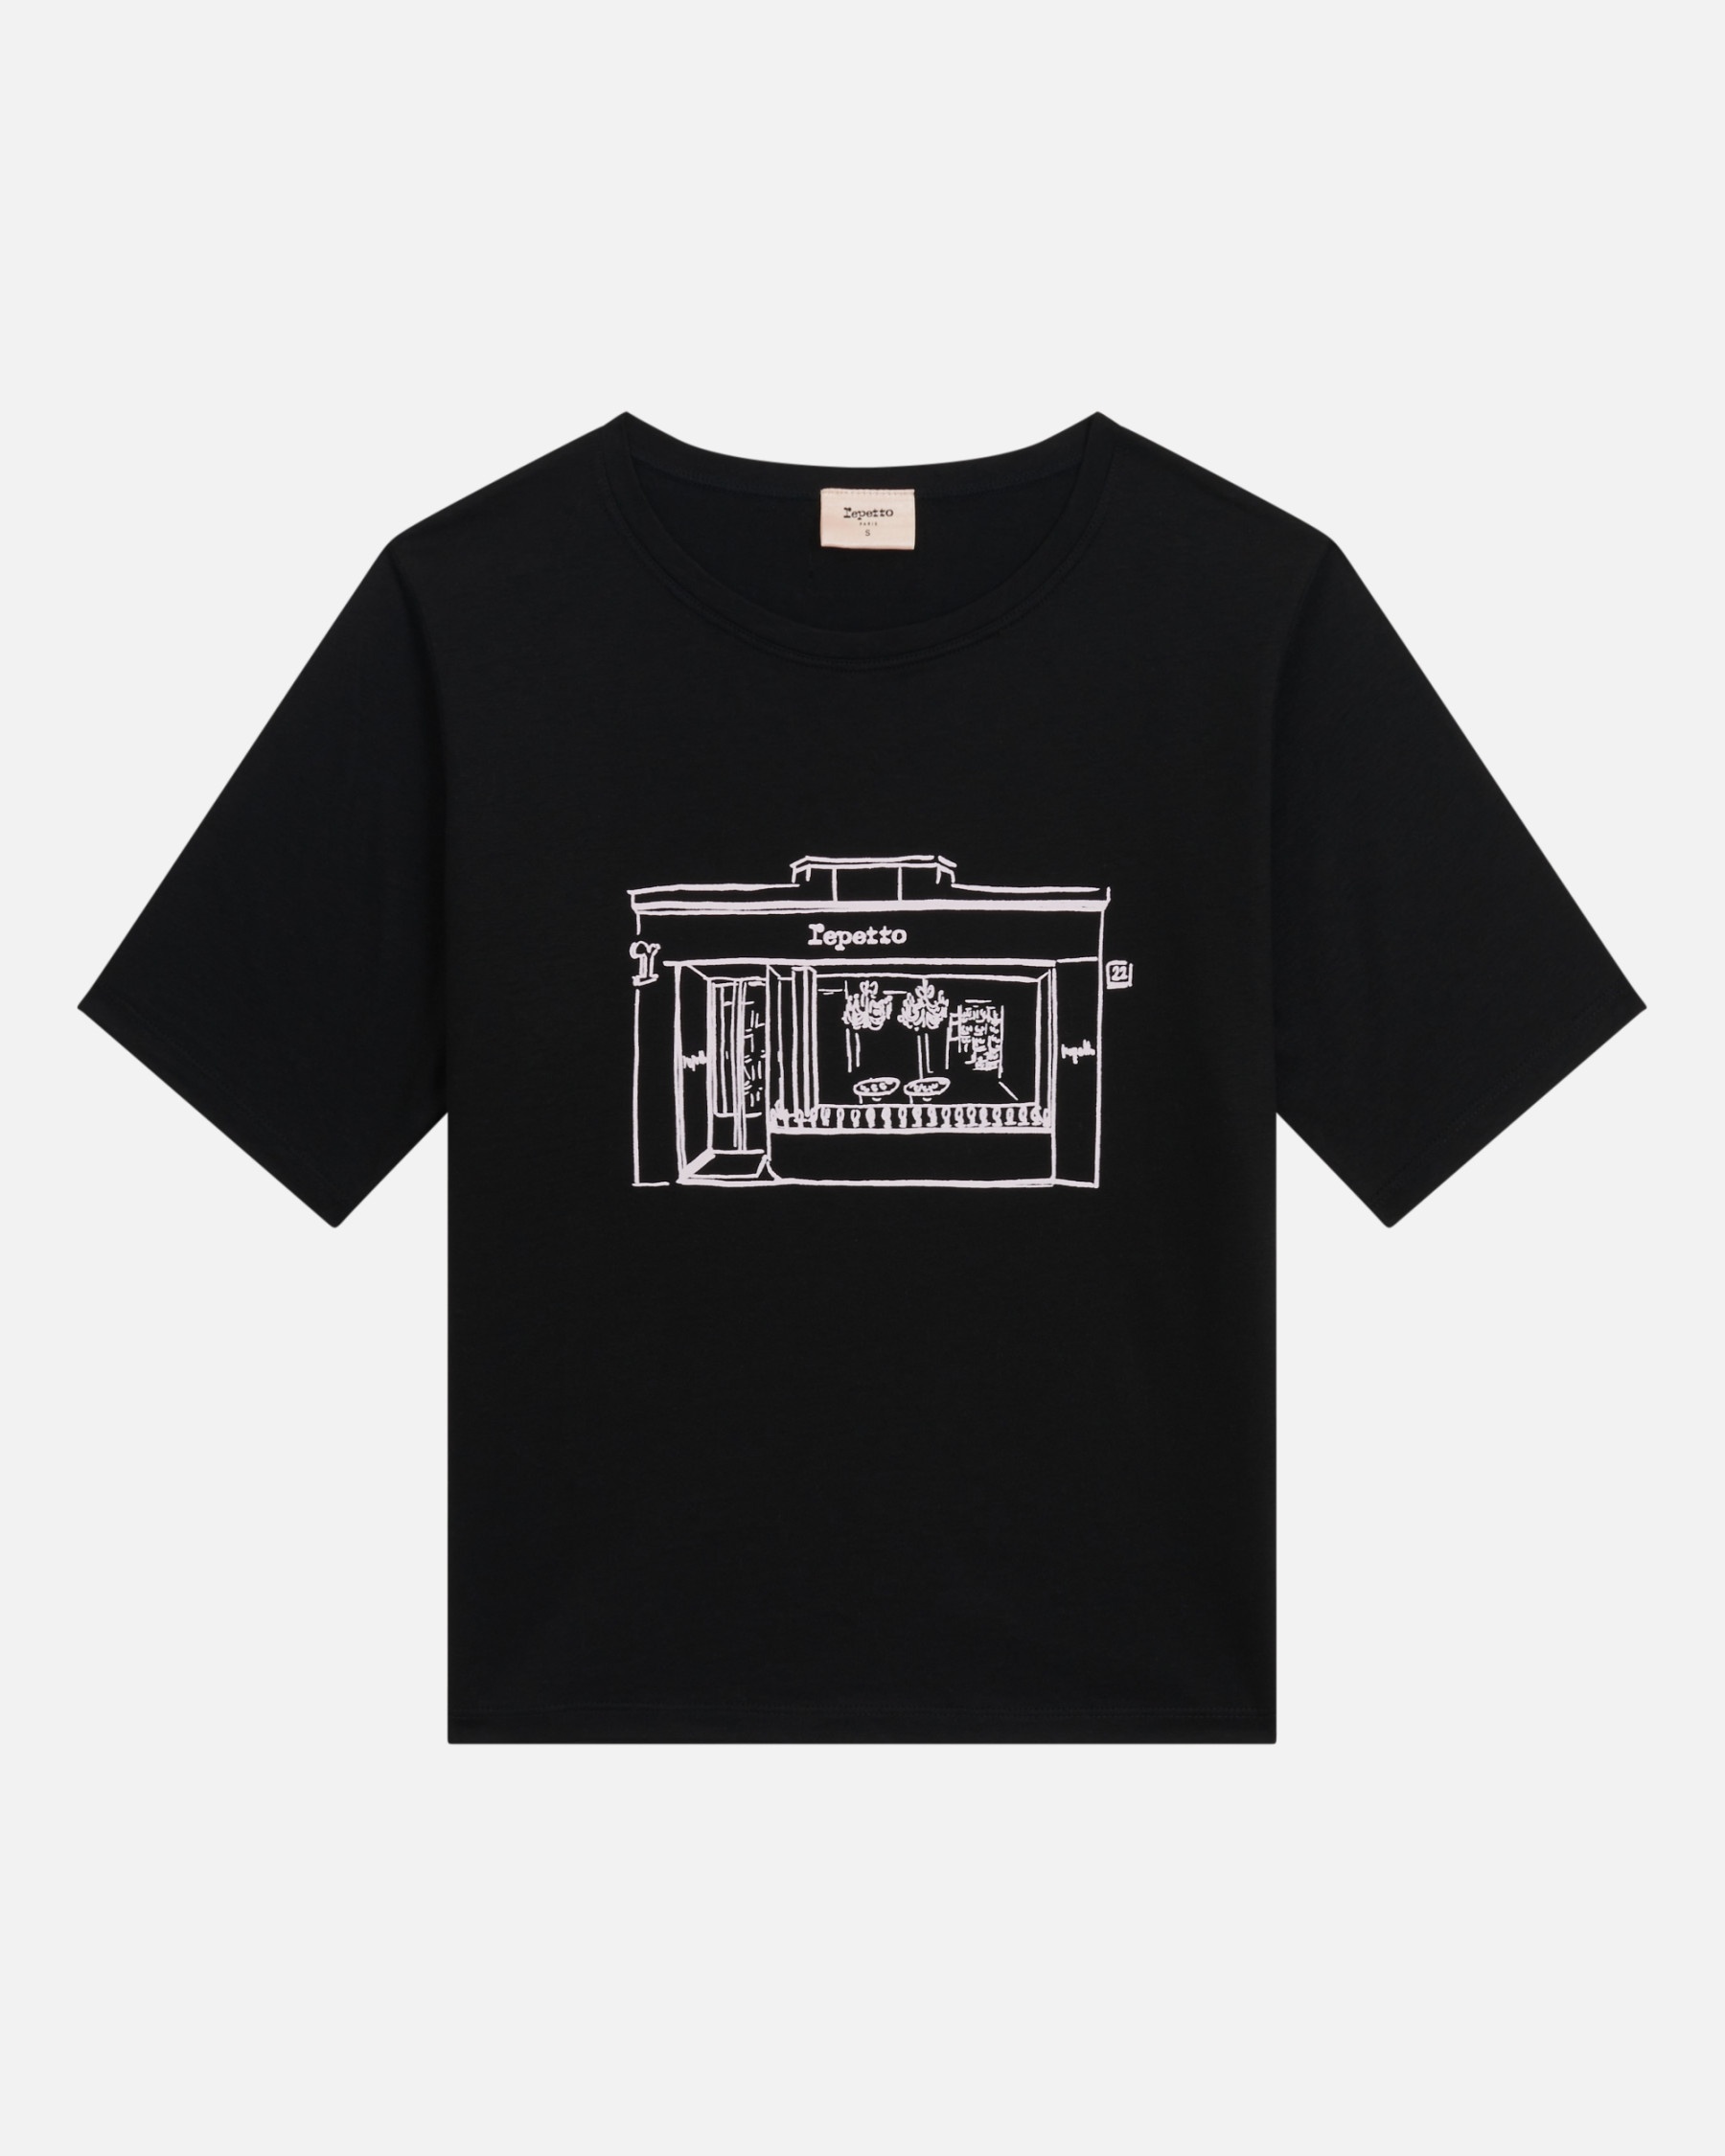 Repetto boutique t-shirt - 1